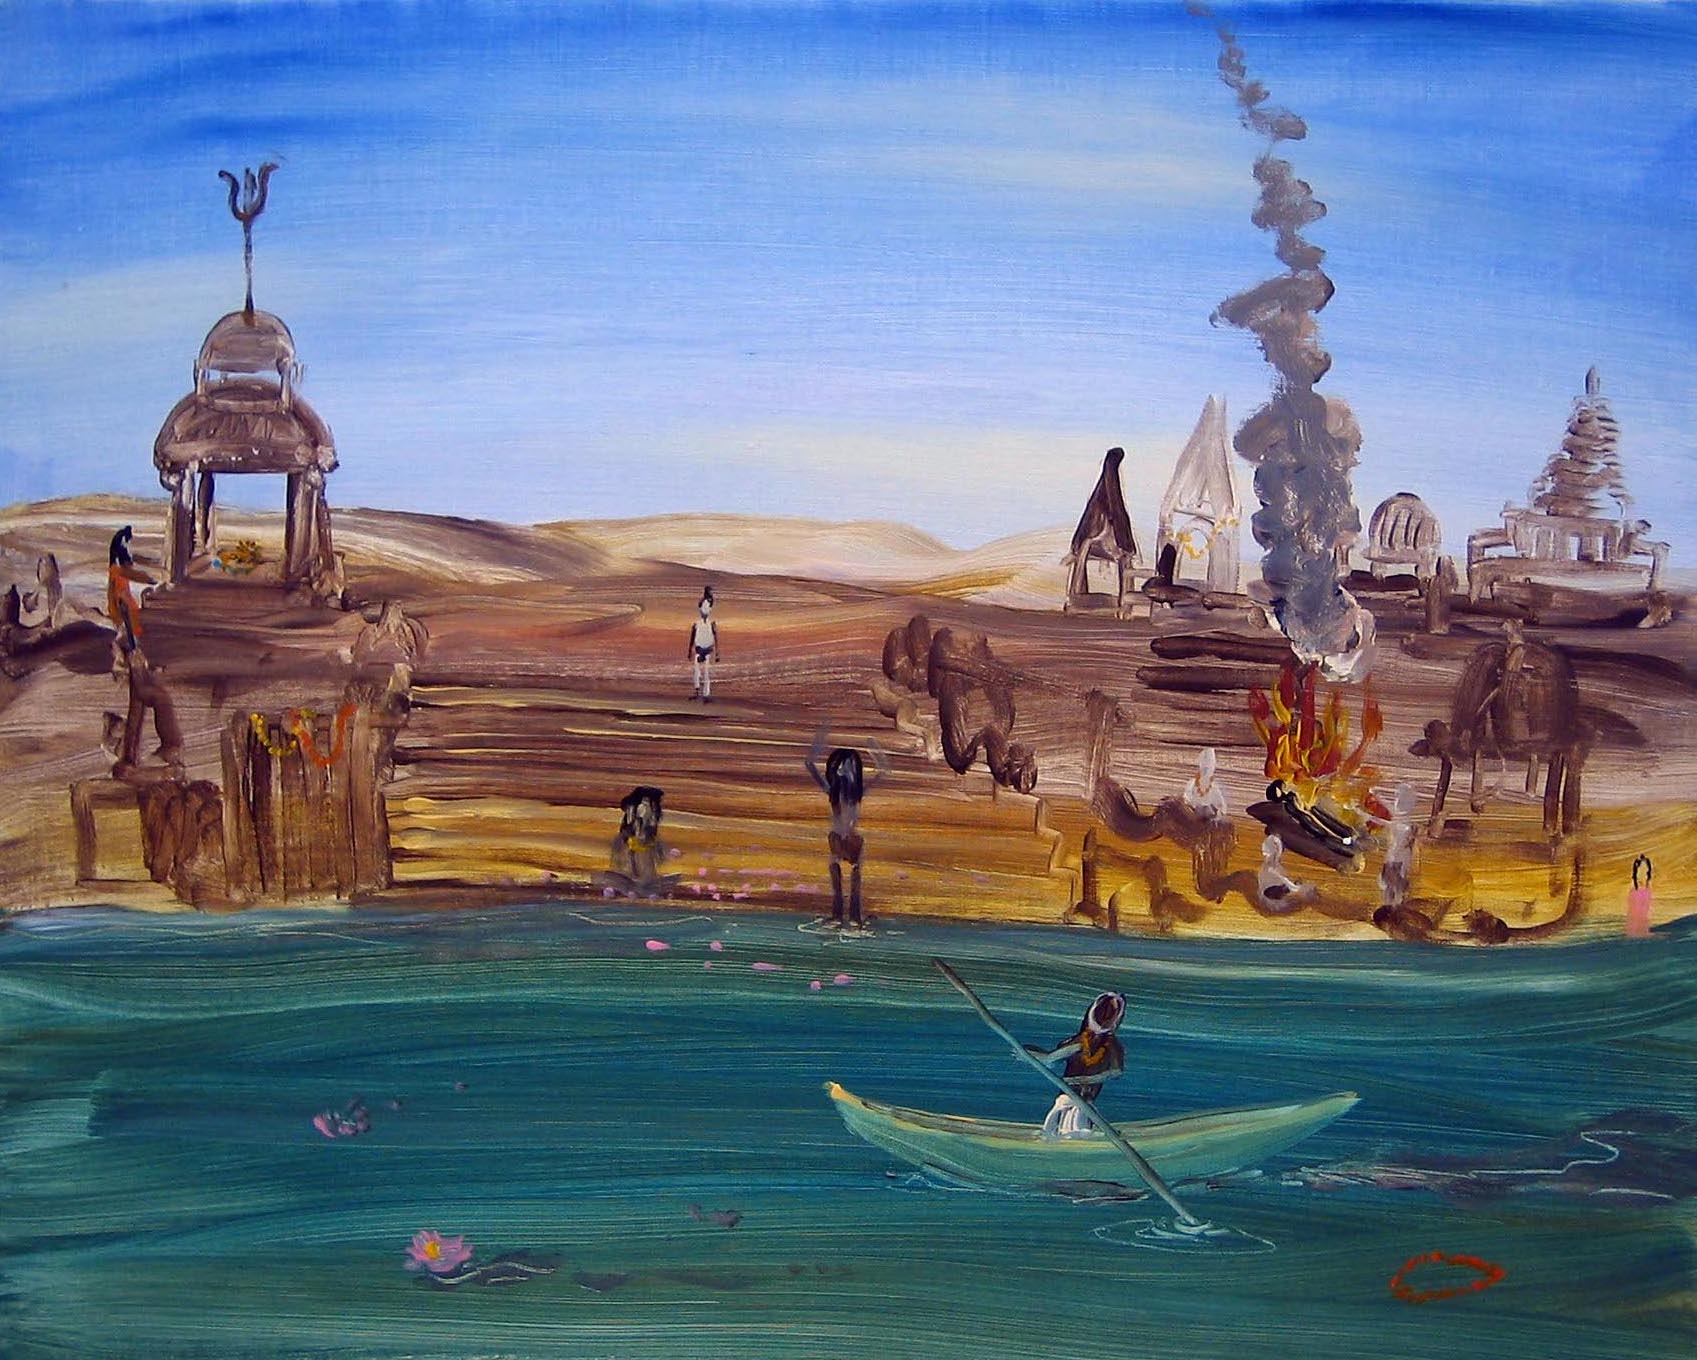      Benares   2005   acrylic on canvas   40 x 50 cm  